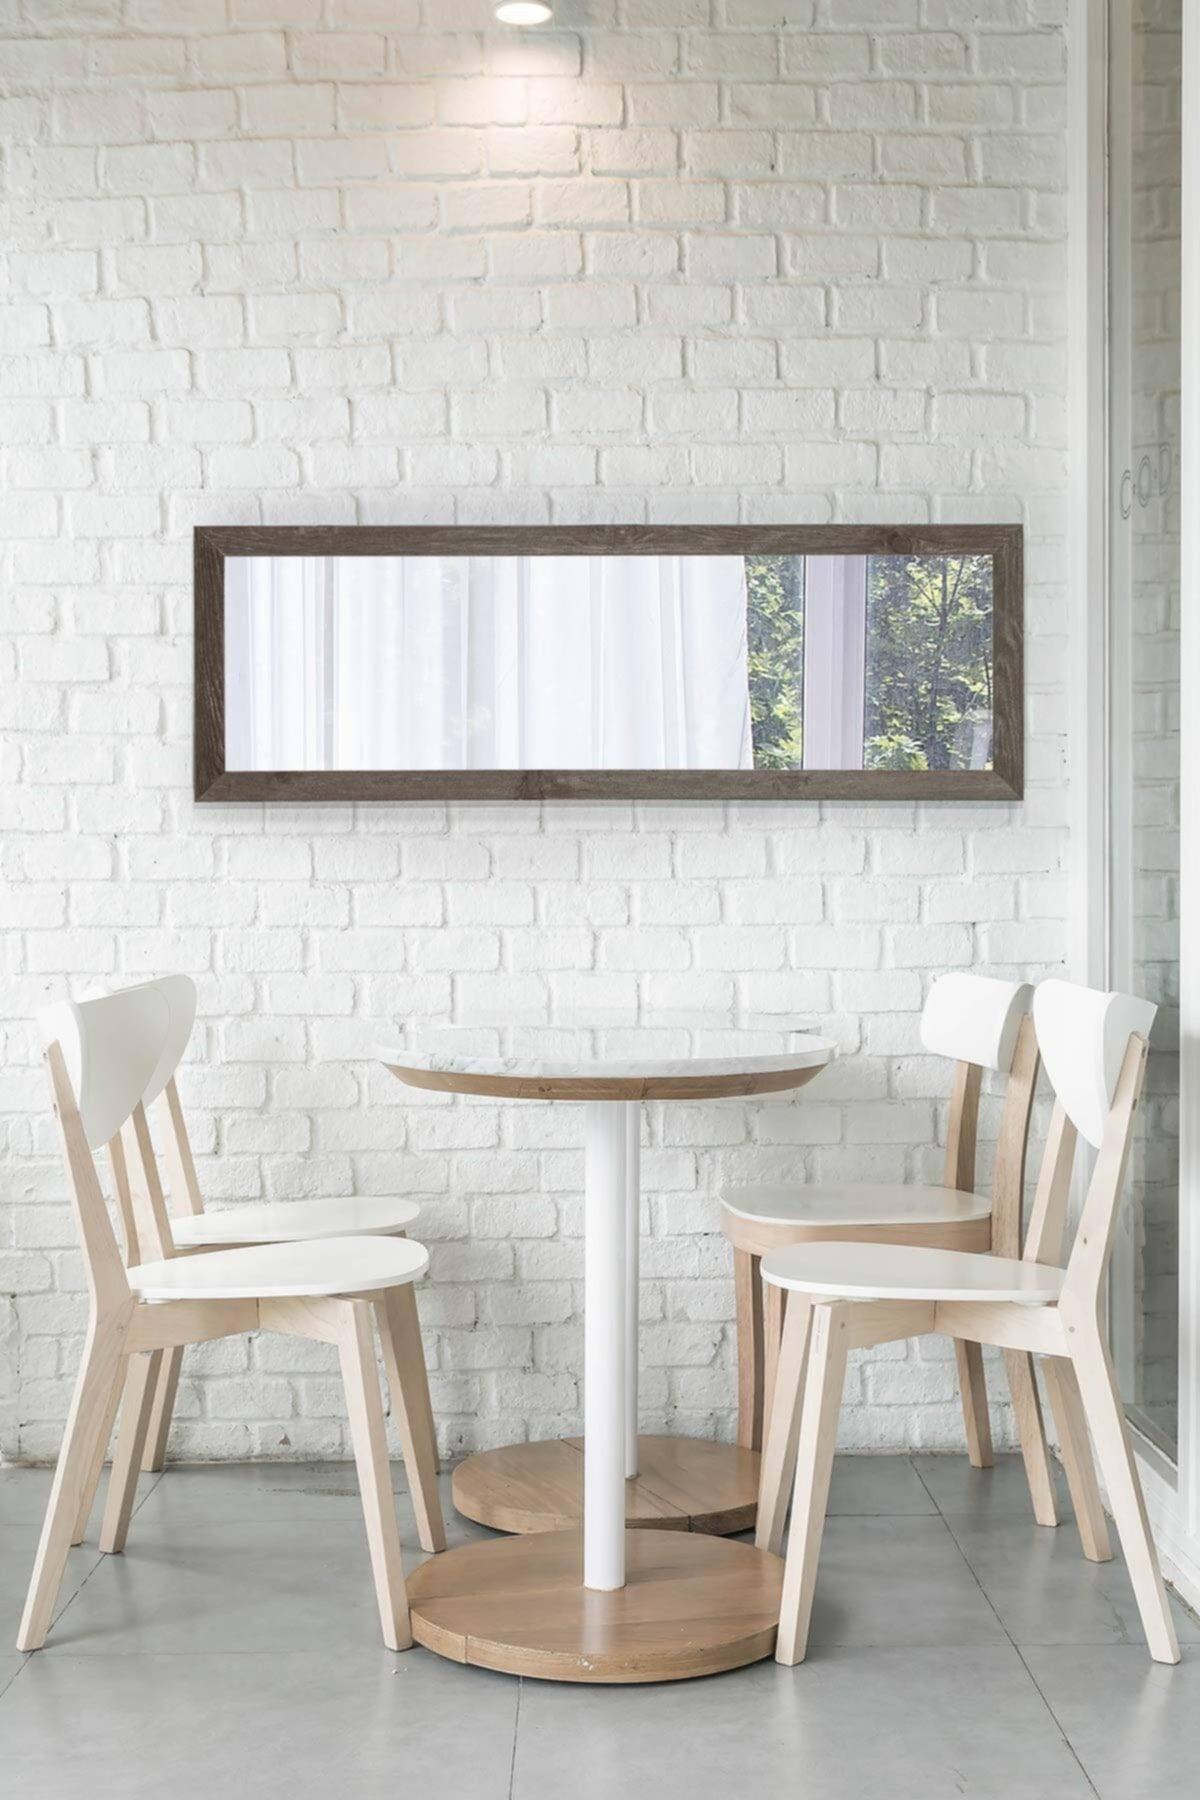 Natural Wood 120x40 Cm Gray Paris Decor Shelf Handmade Living Room Office Kitchen Wall Console Full Length Mirror - Swordslife